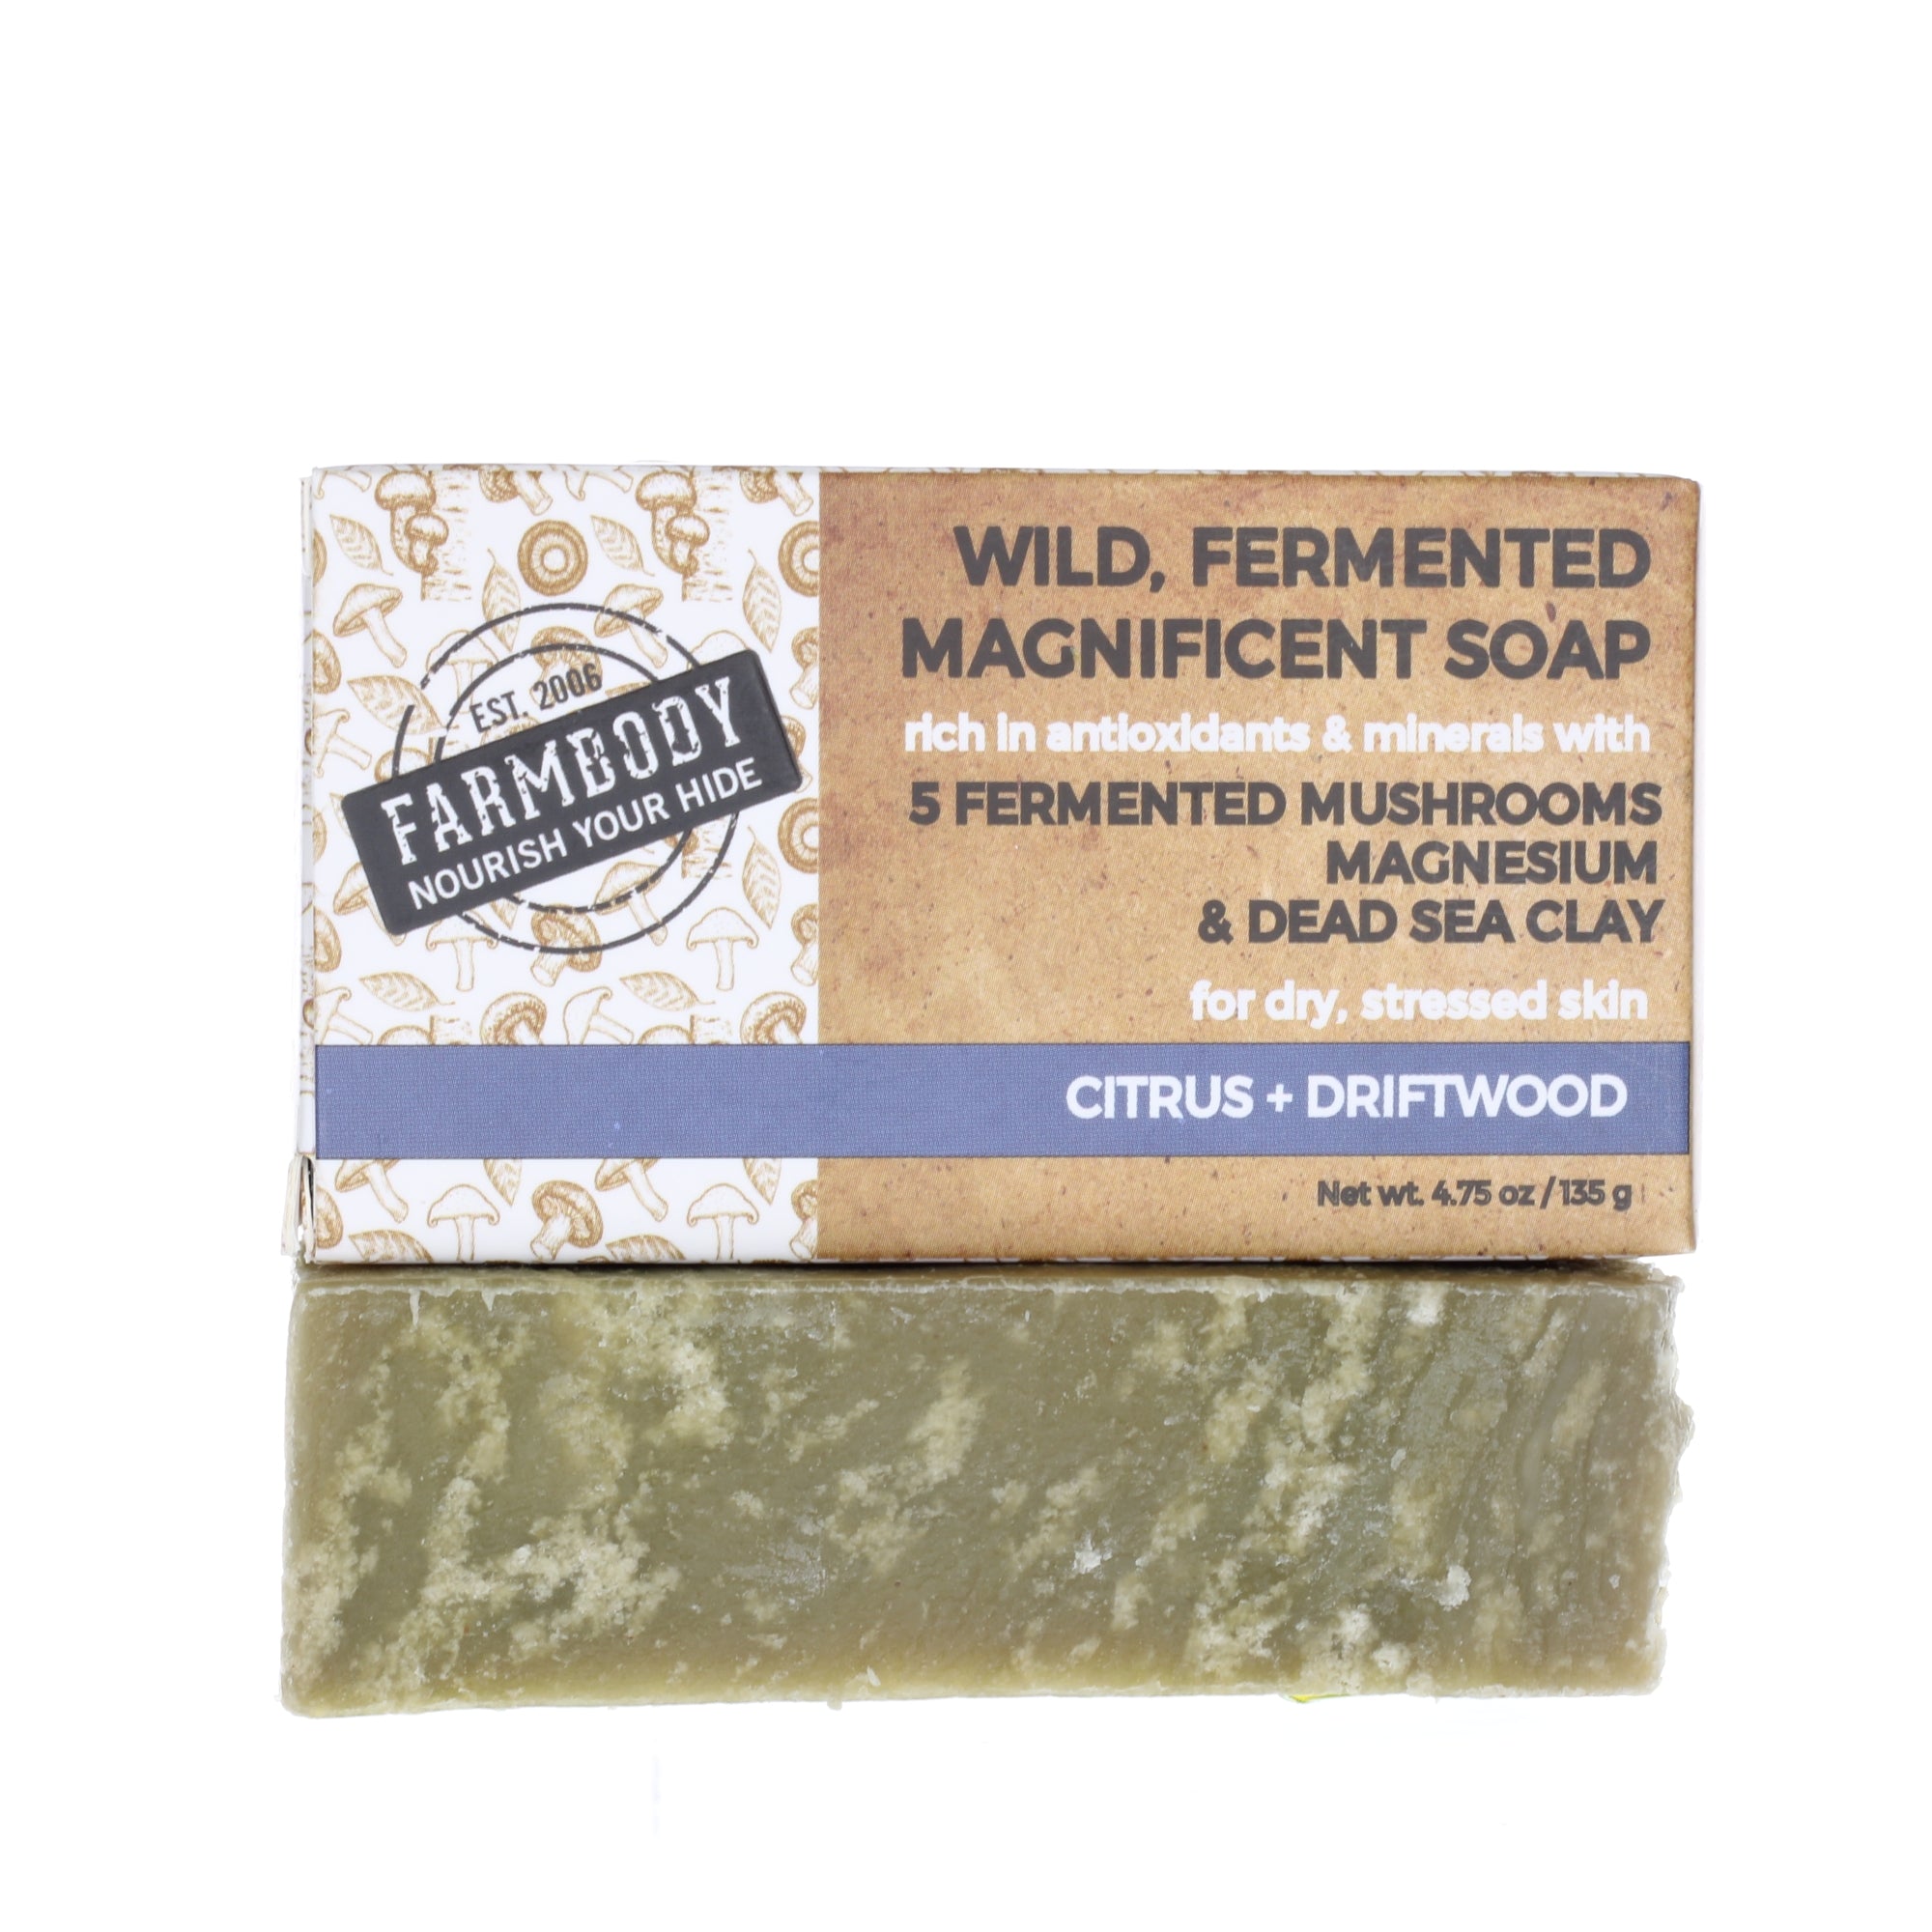 Magnesium Soap to Soothe Sensitive Skin – Farmbody